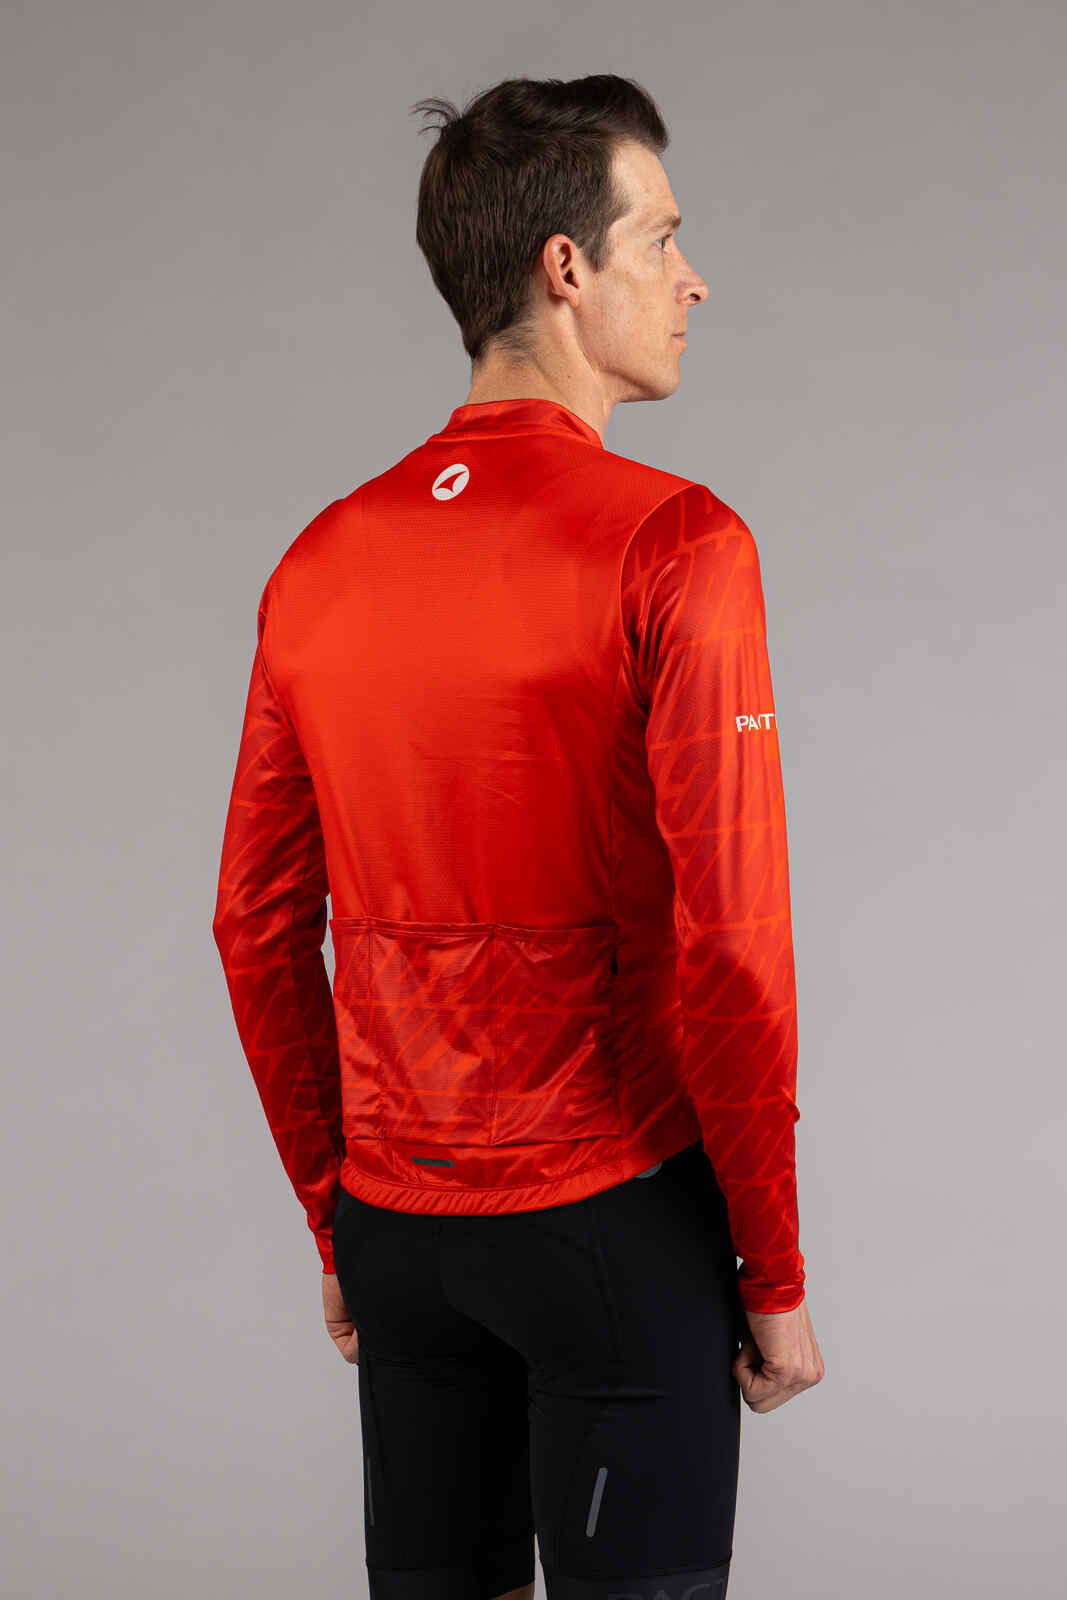 Men's Red Long Sleeve Bike Jersey - Back View